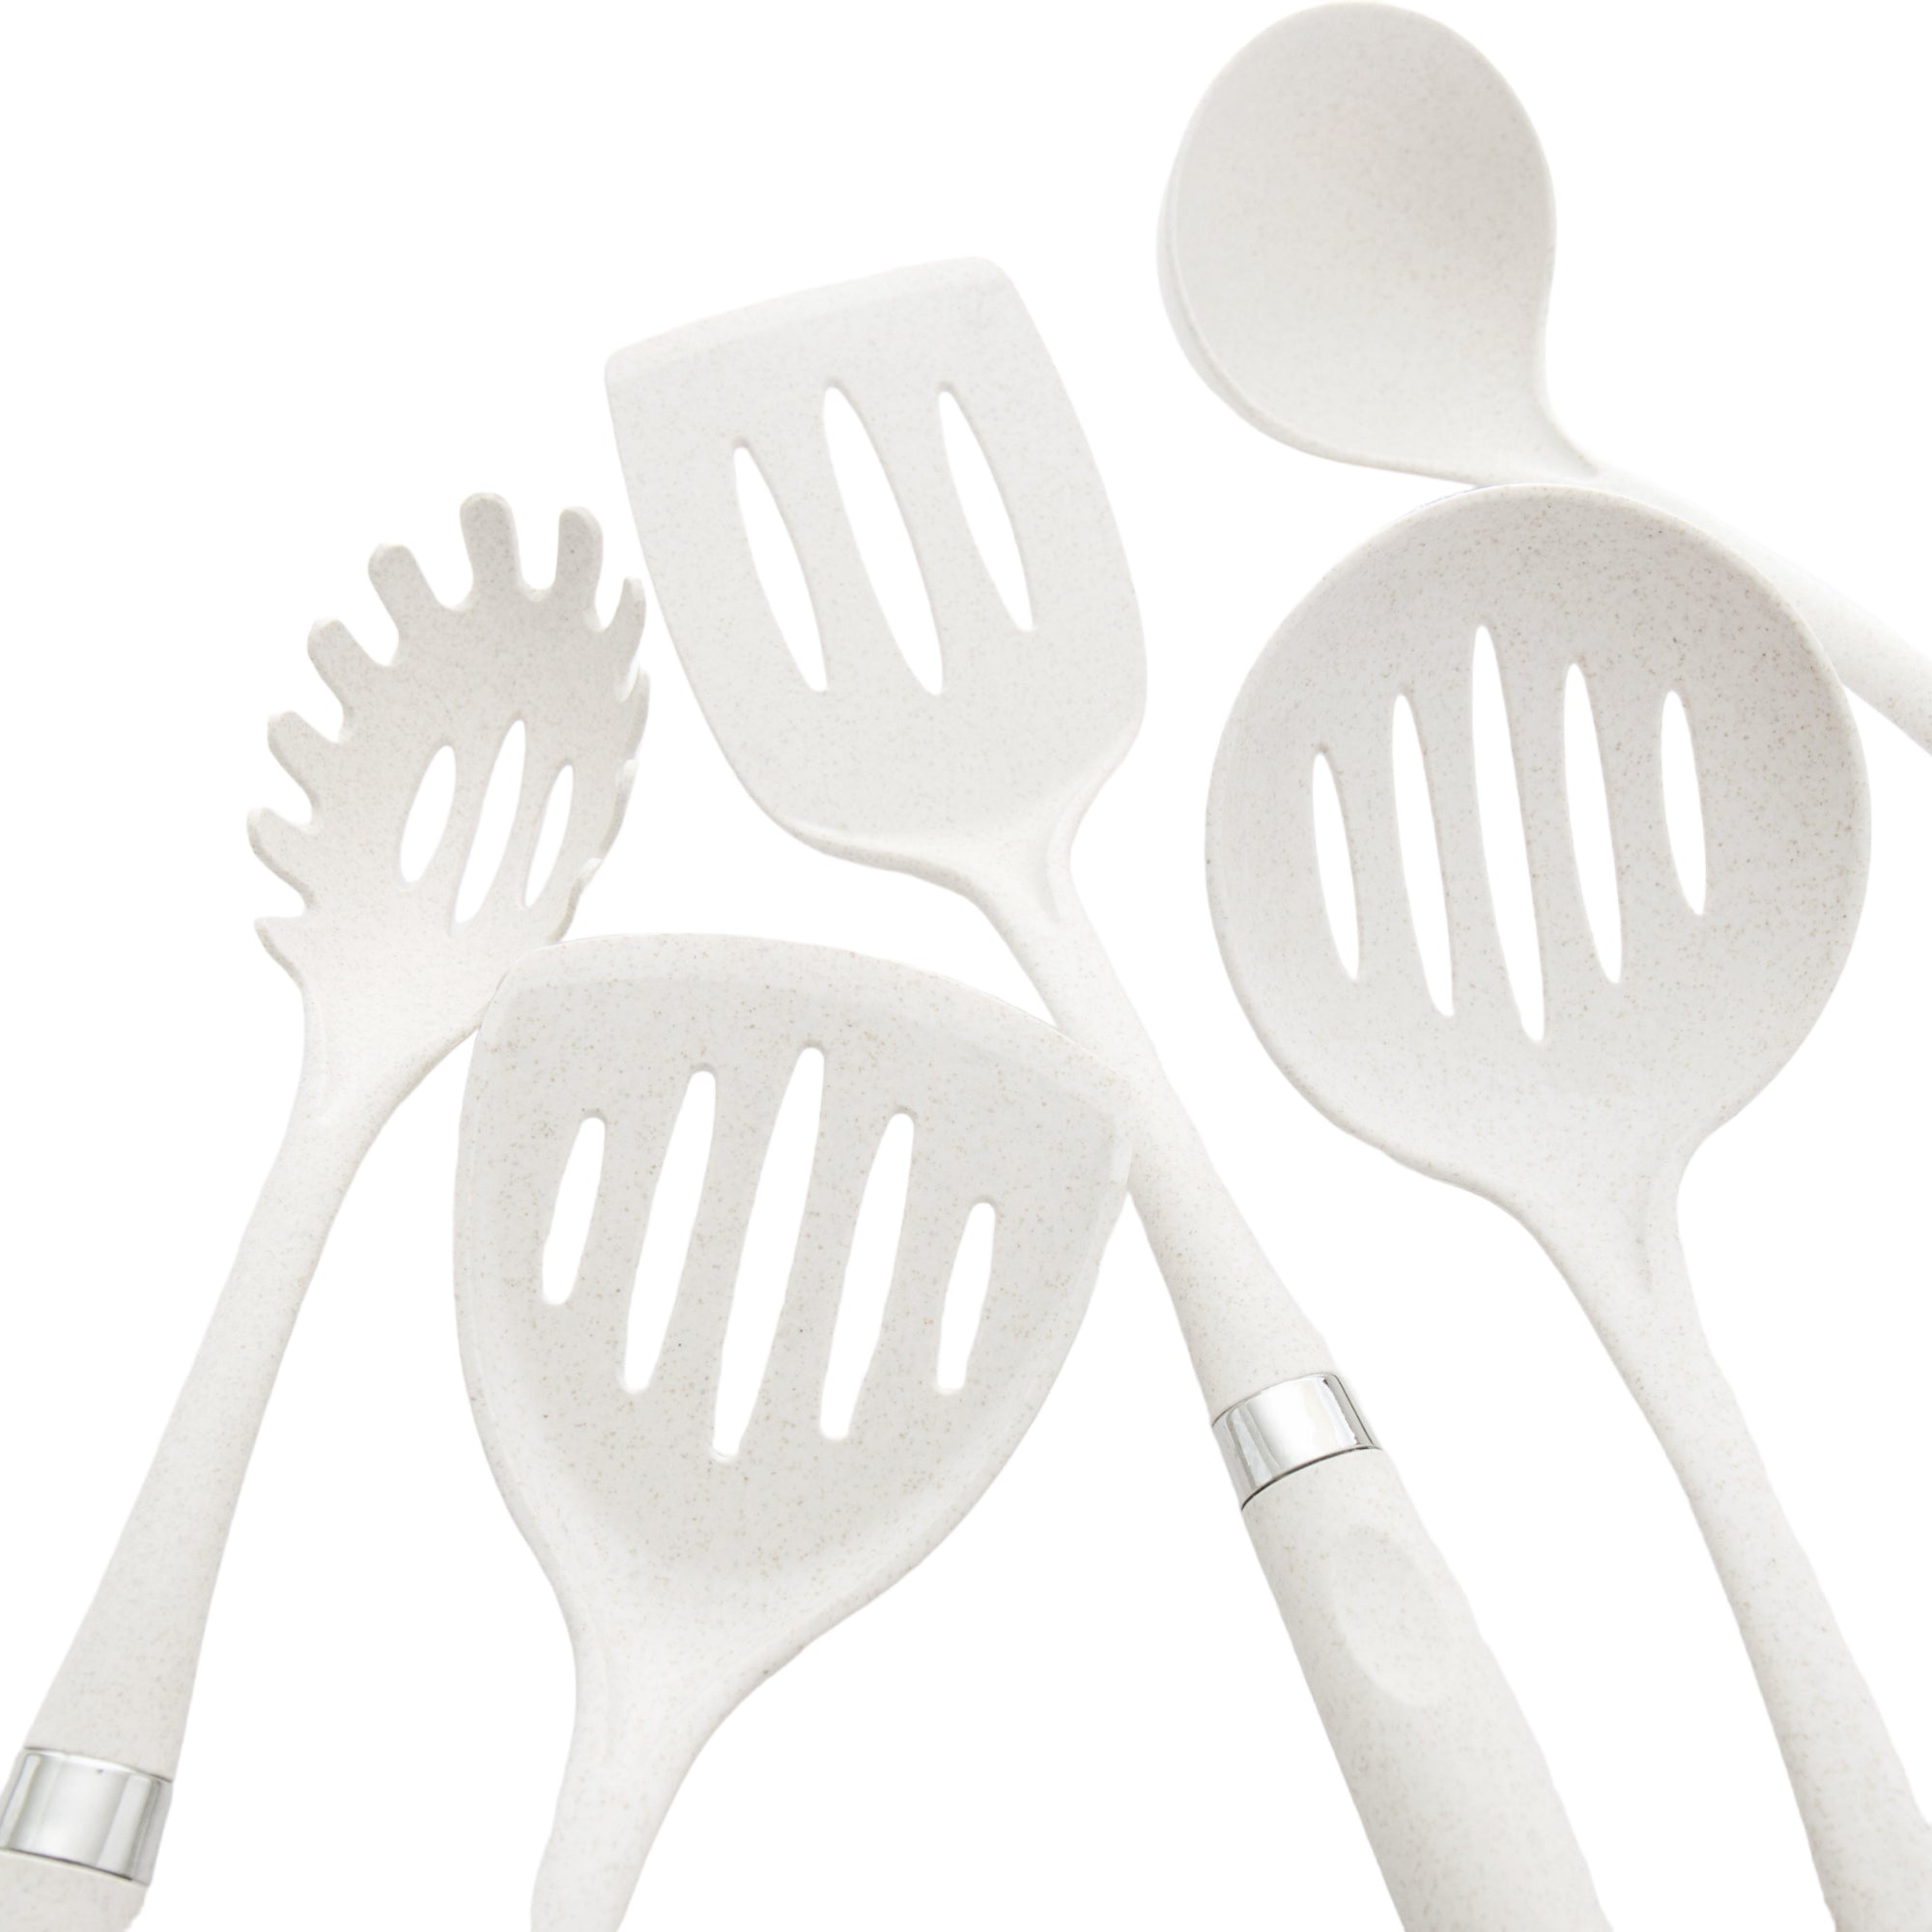 Nylon Serving Ladle Spoon Cream Silica Gel Tableware